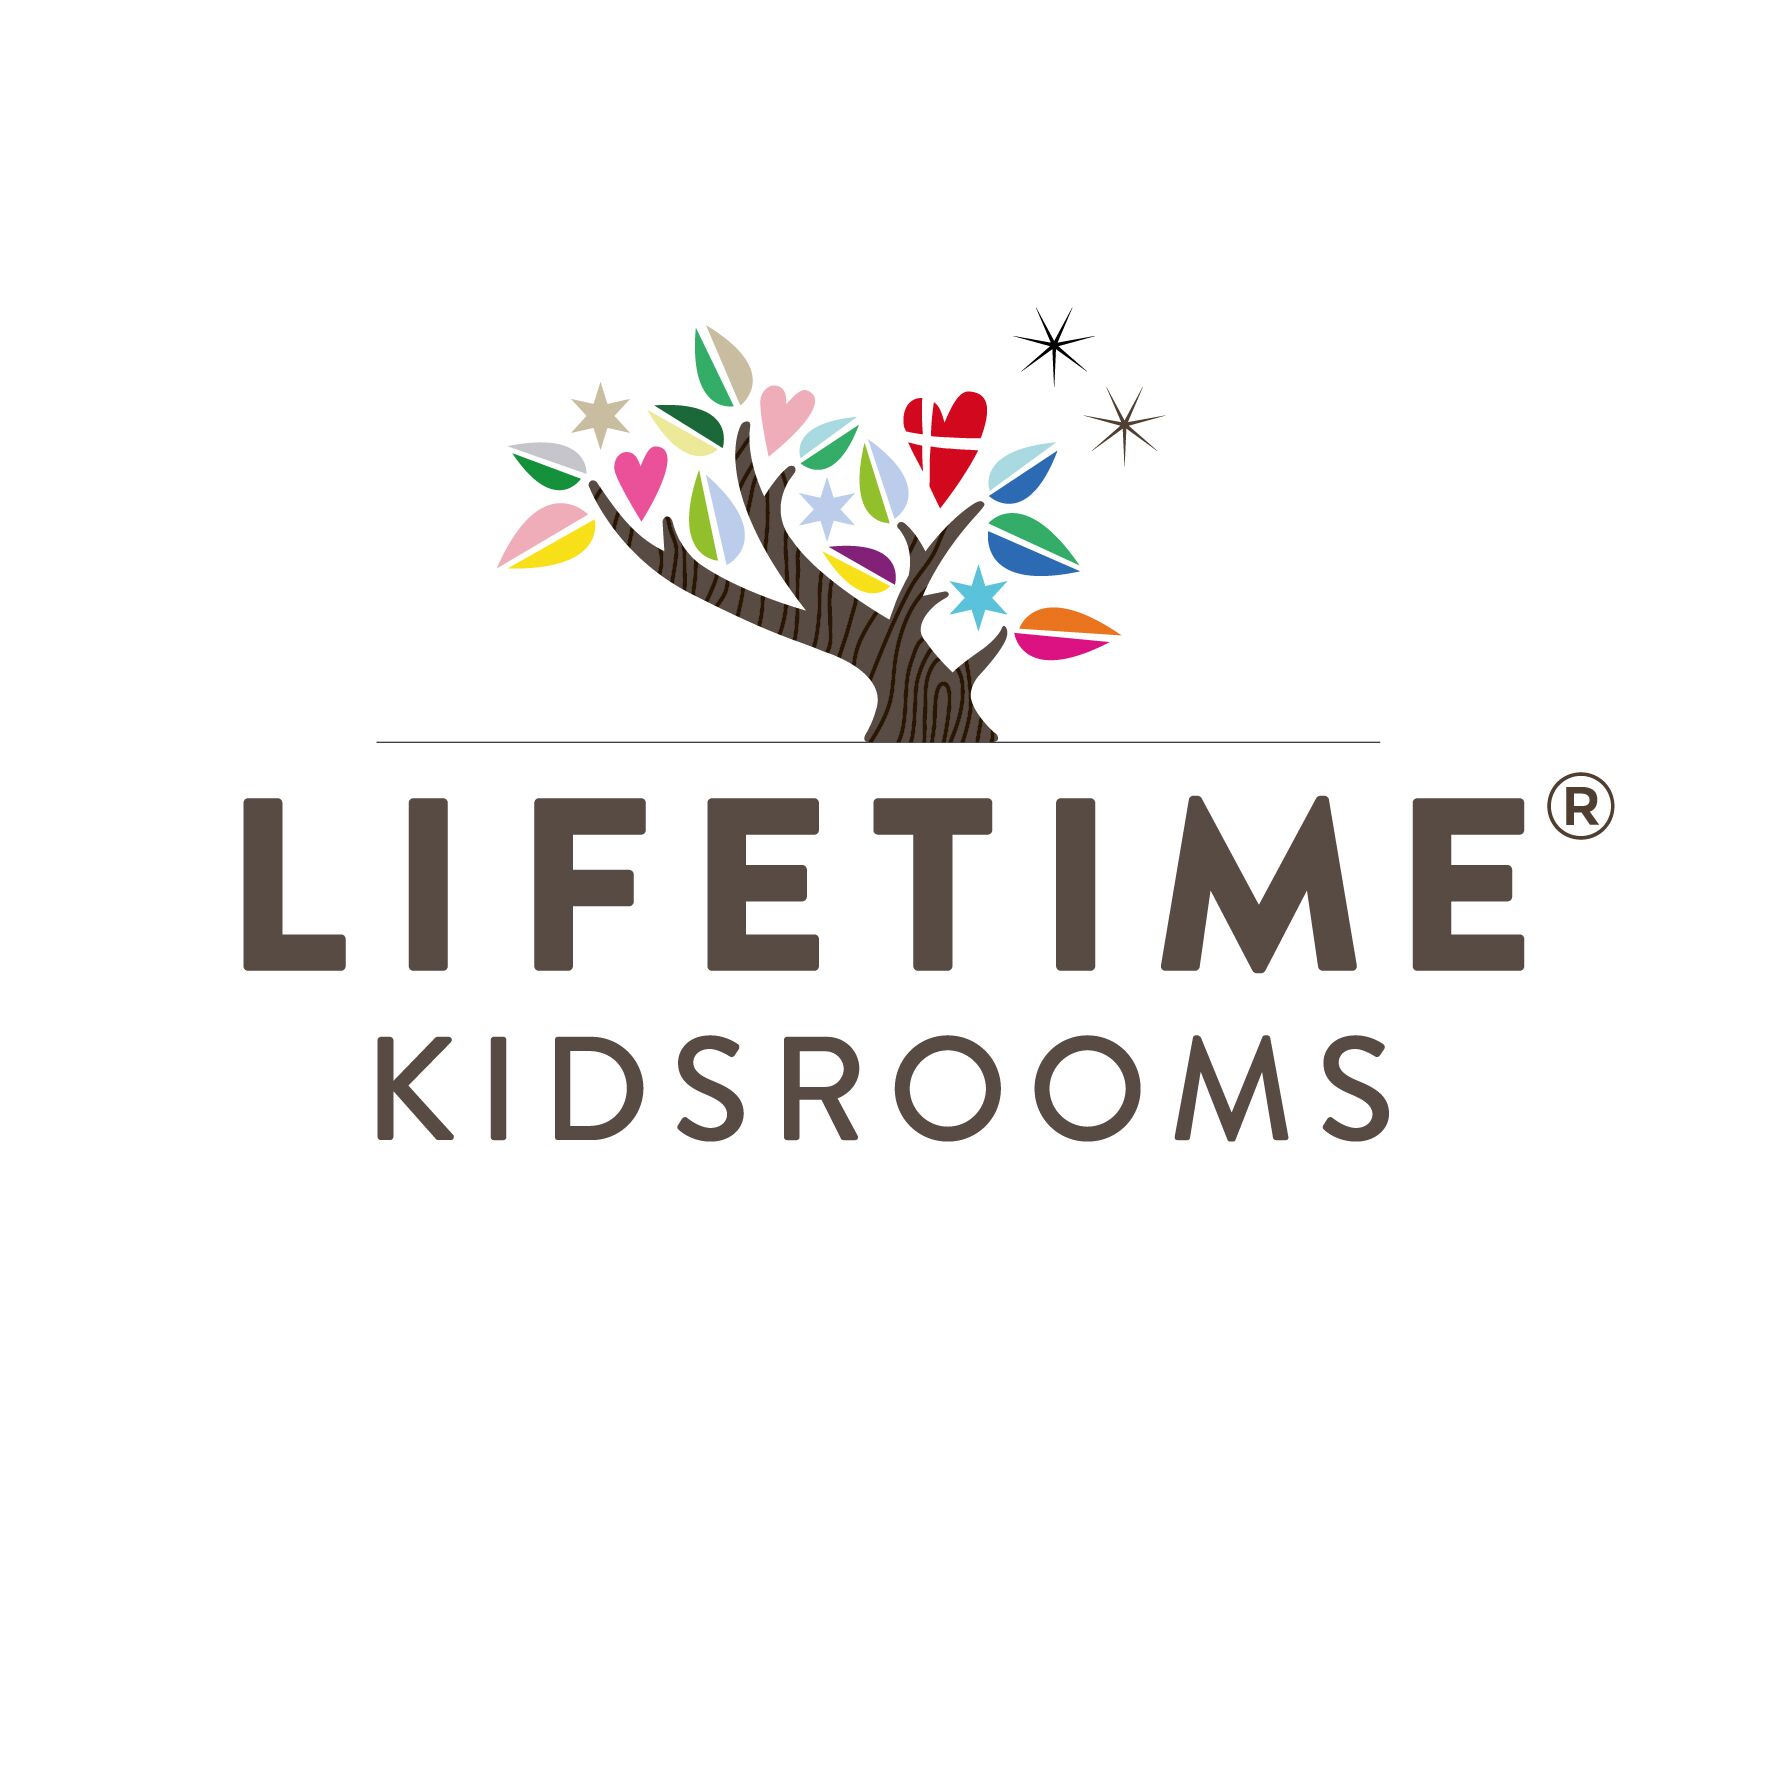 Lifetime Kidsrooms